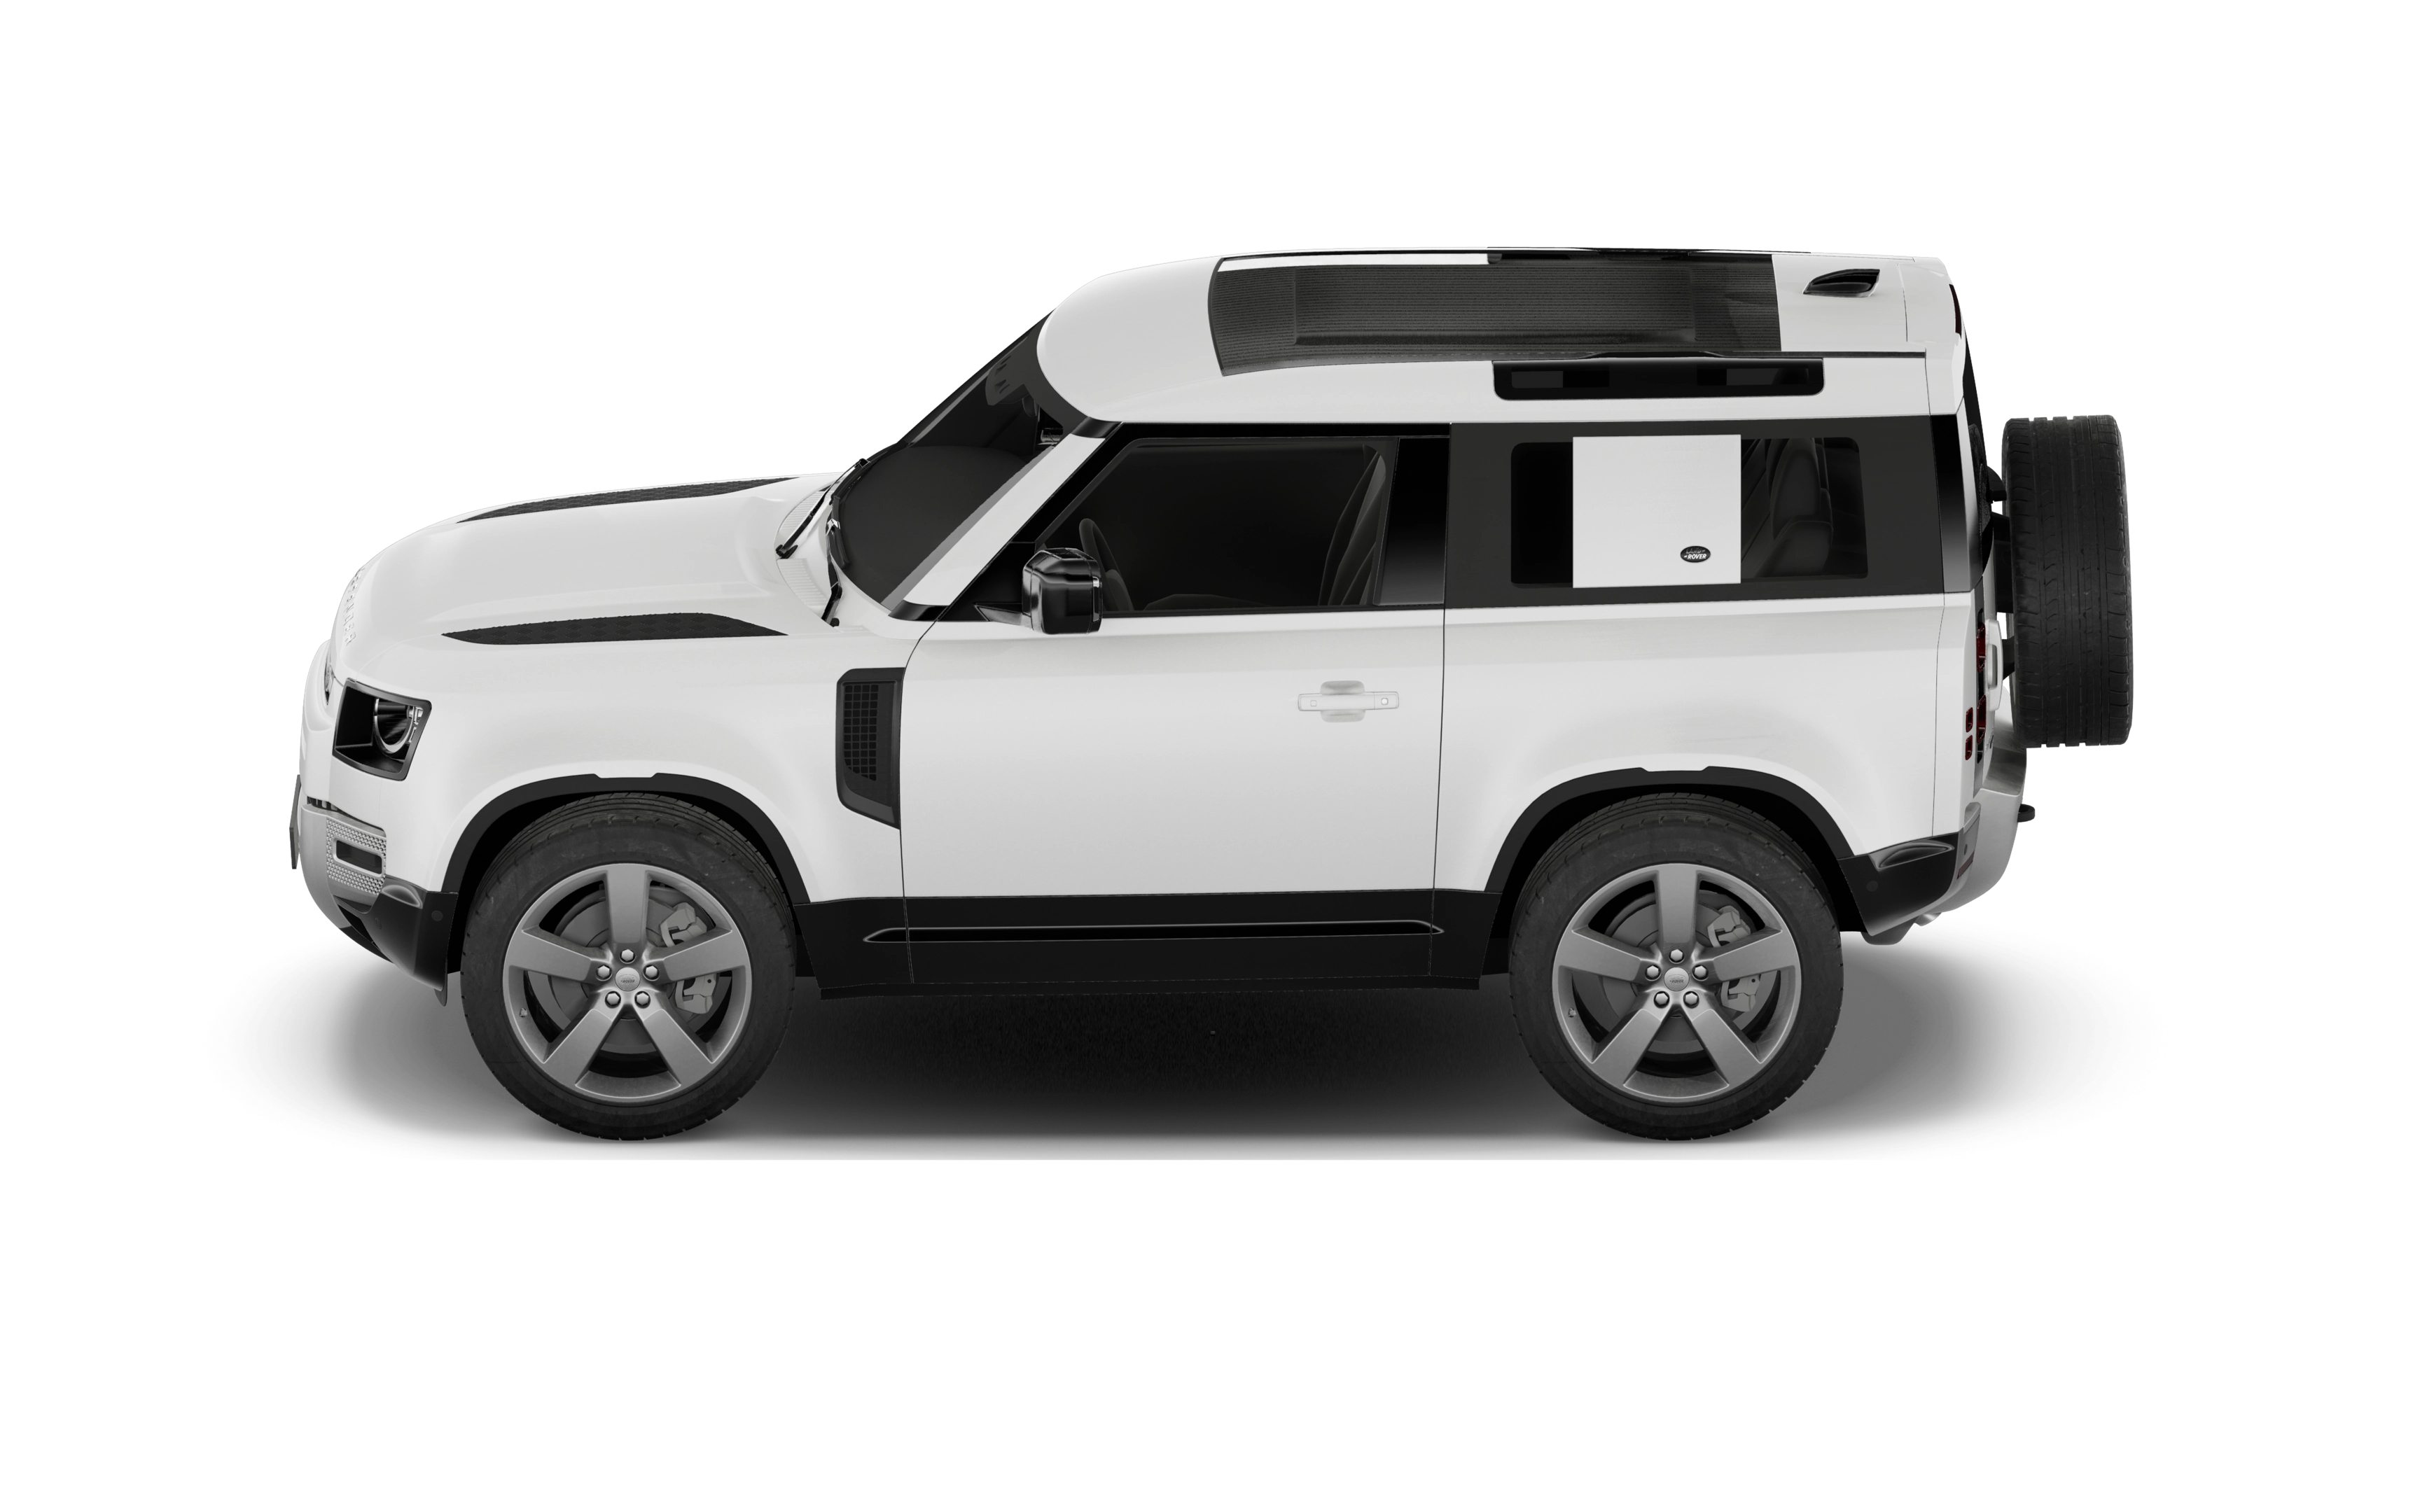 Land rover defender estate 3.0 d250 hse 90 3 doors auto [6 seat]